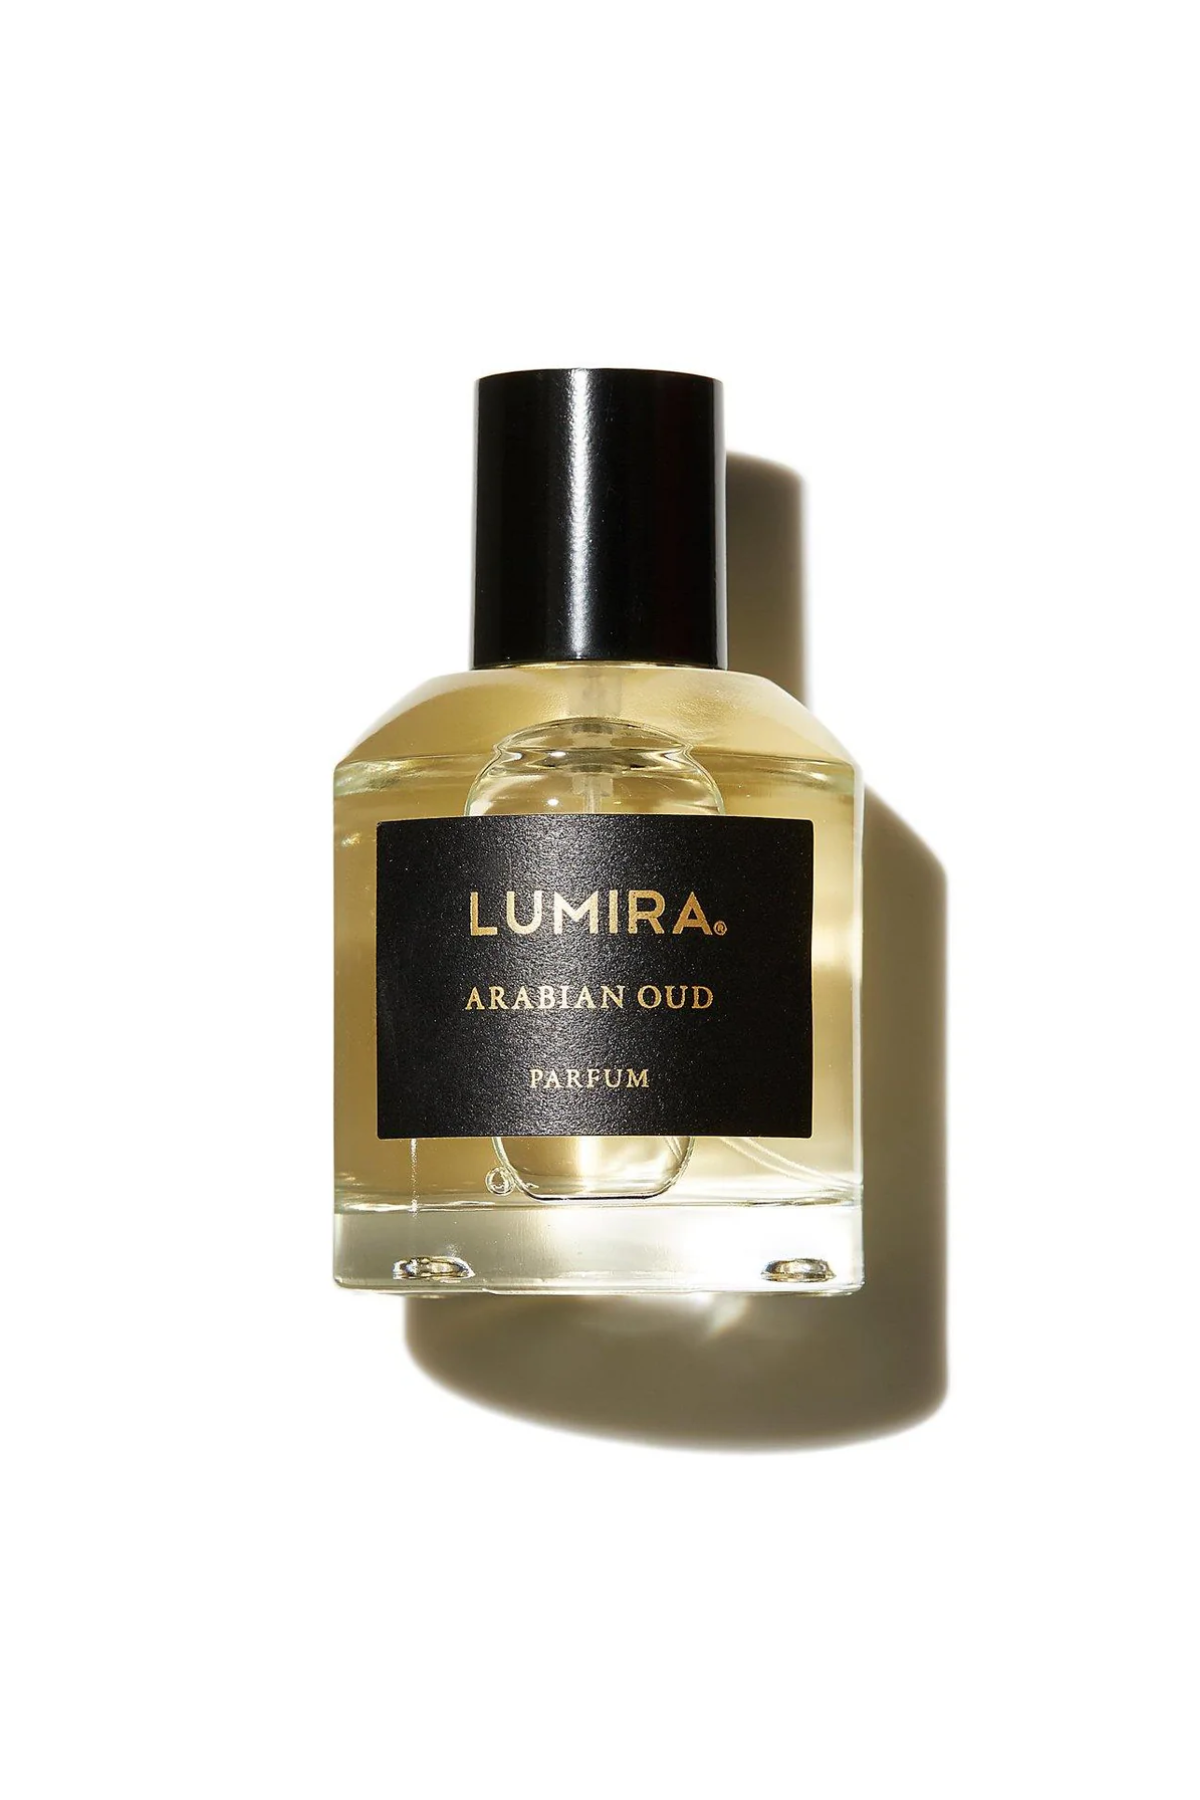 A bottle of Lumira Arabian Oud perfume against a white background.